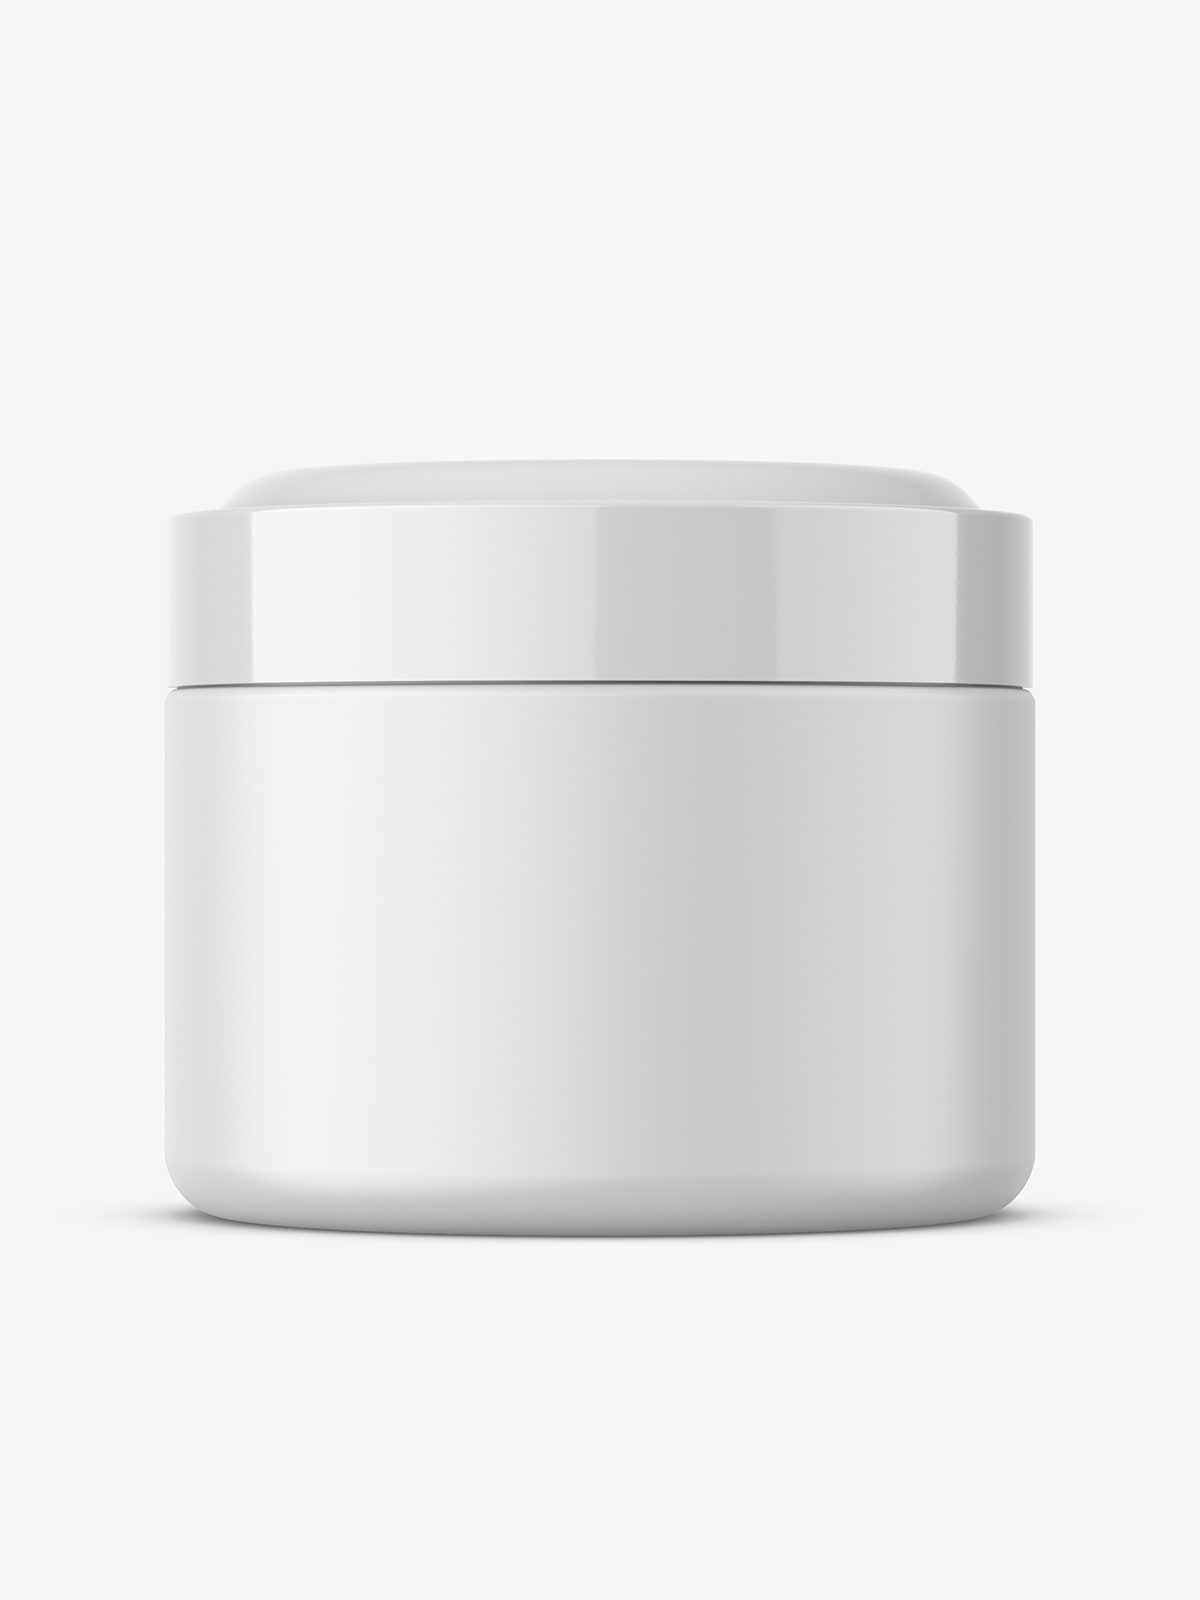 Download Plastic cream jar mockup / matt - Smarty Mockups